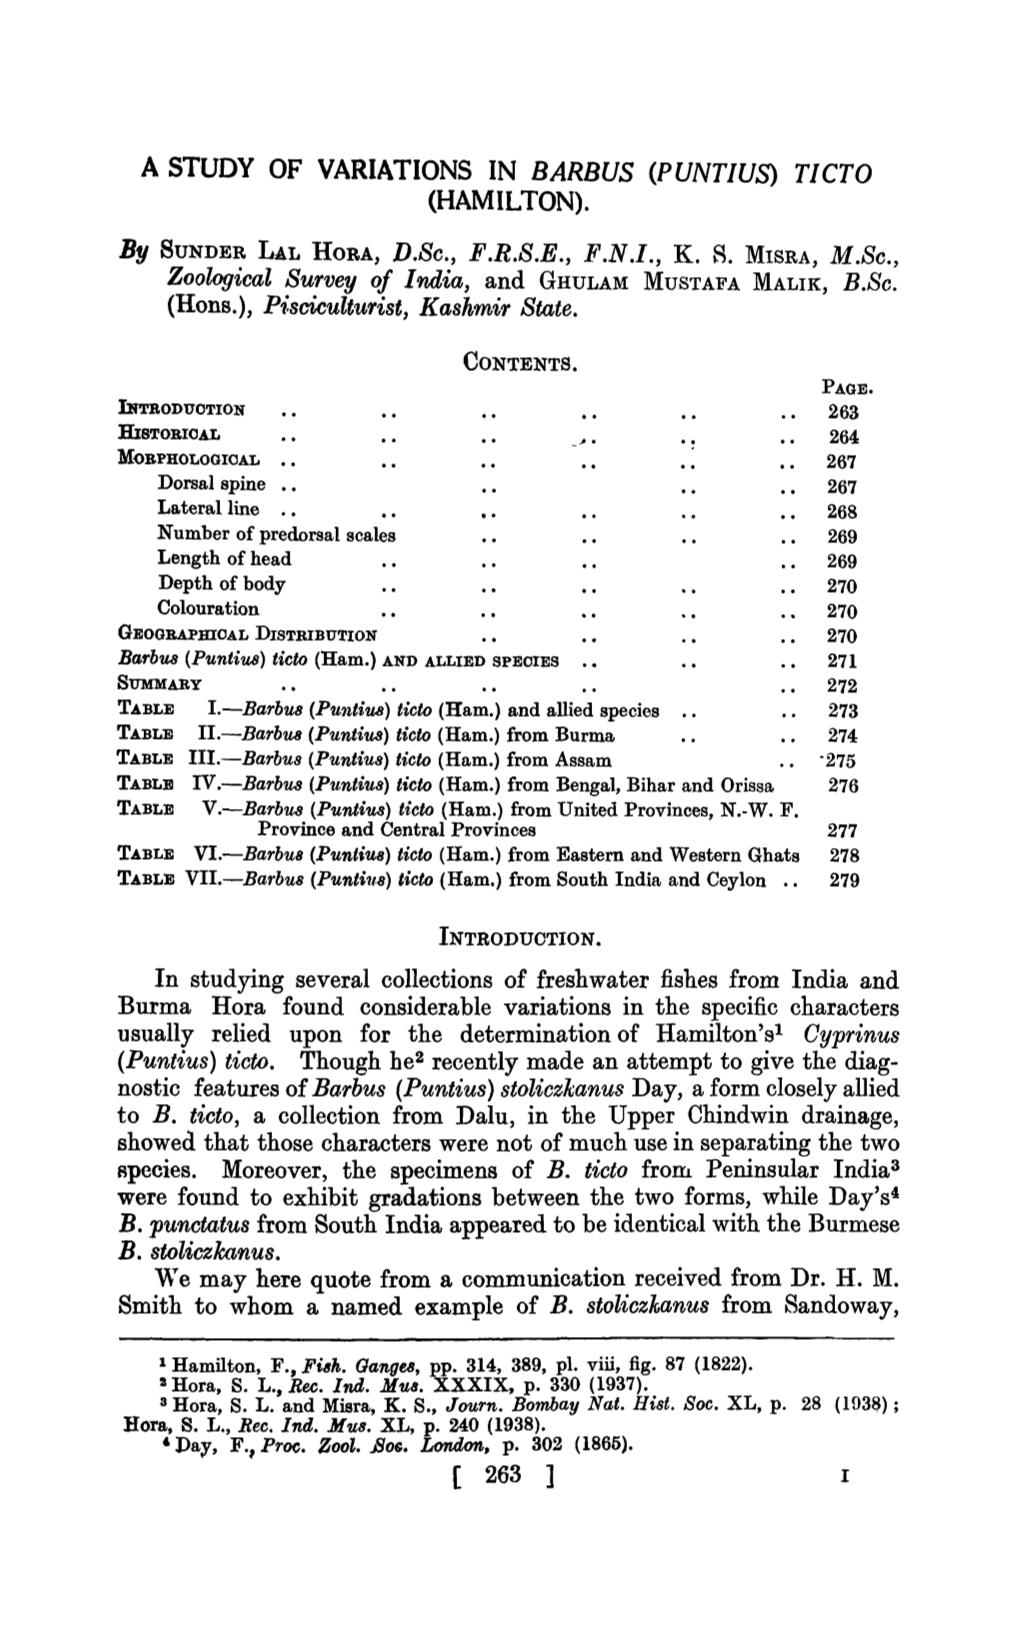 A Study of Variations in Barbus (Puntius) Ticto (Hamilton)